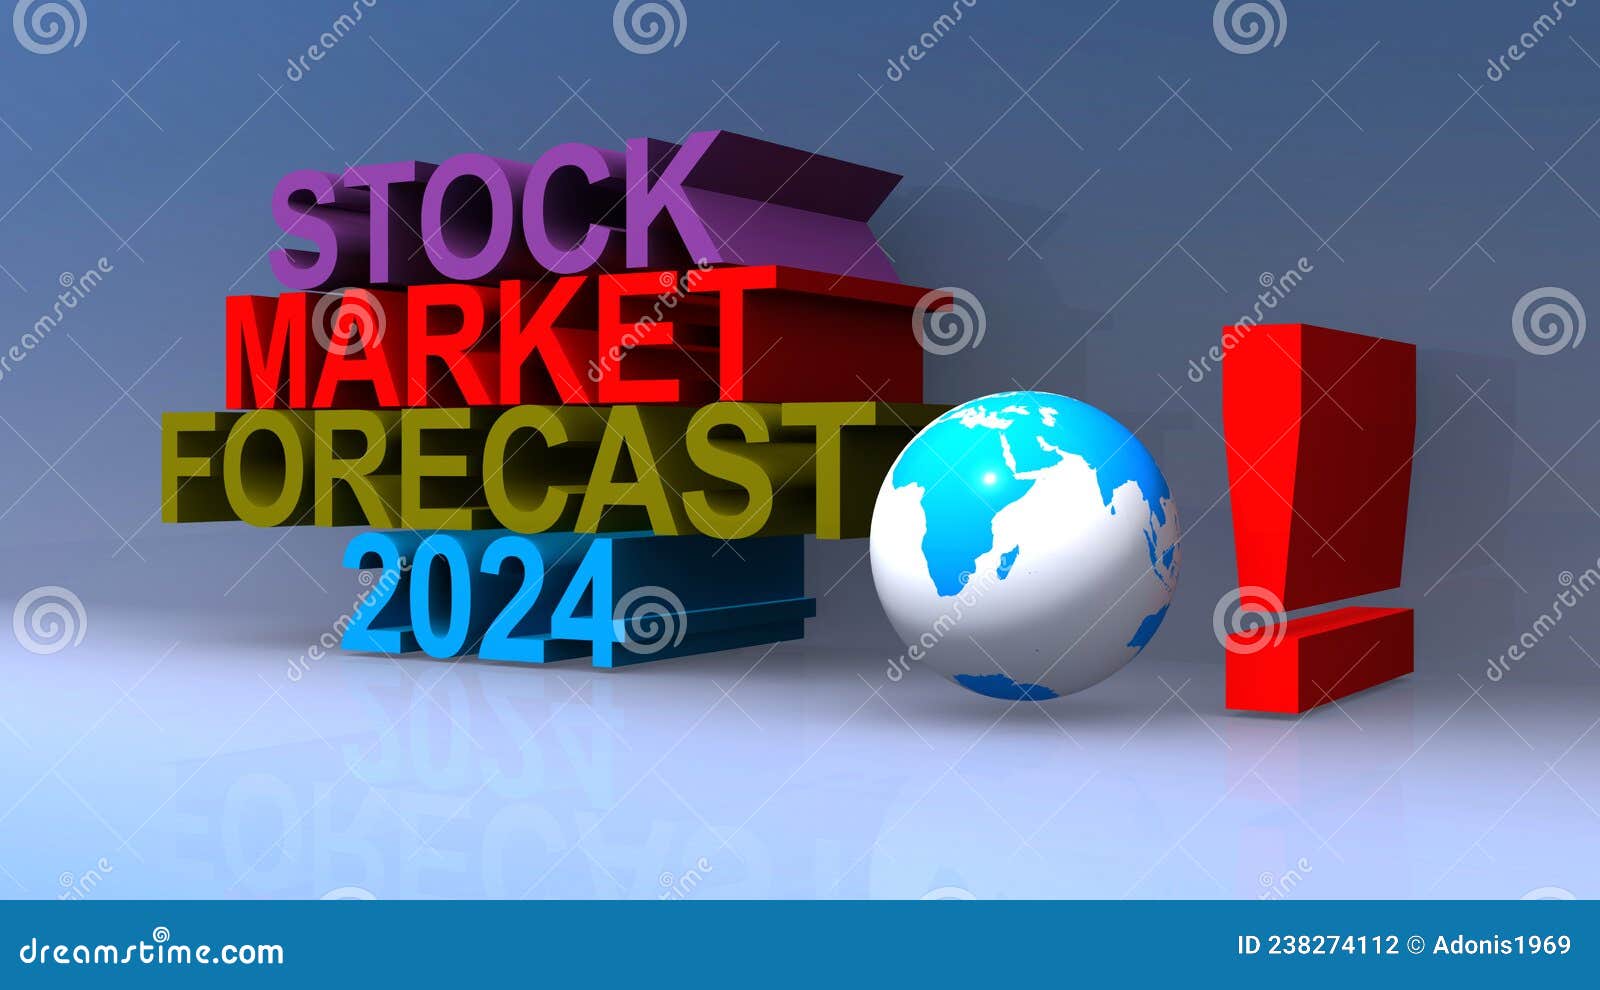 Stock Market Forecast 2024 on Blue Stock Illustration Illustration of